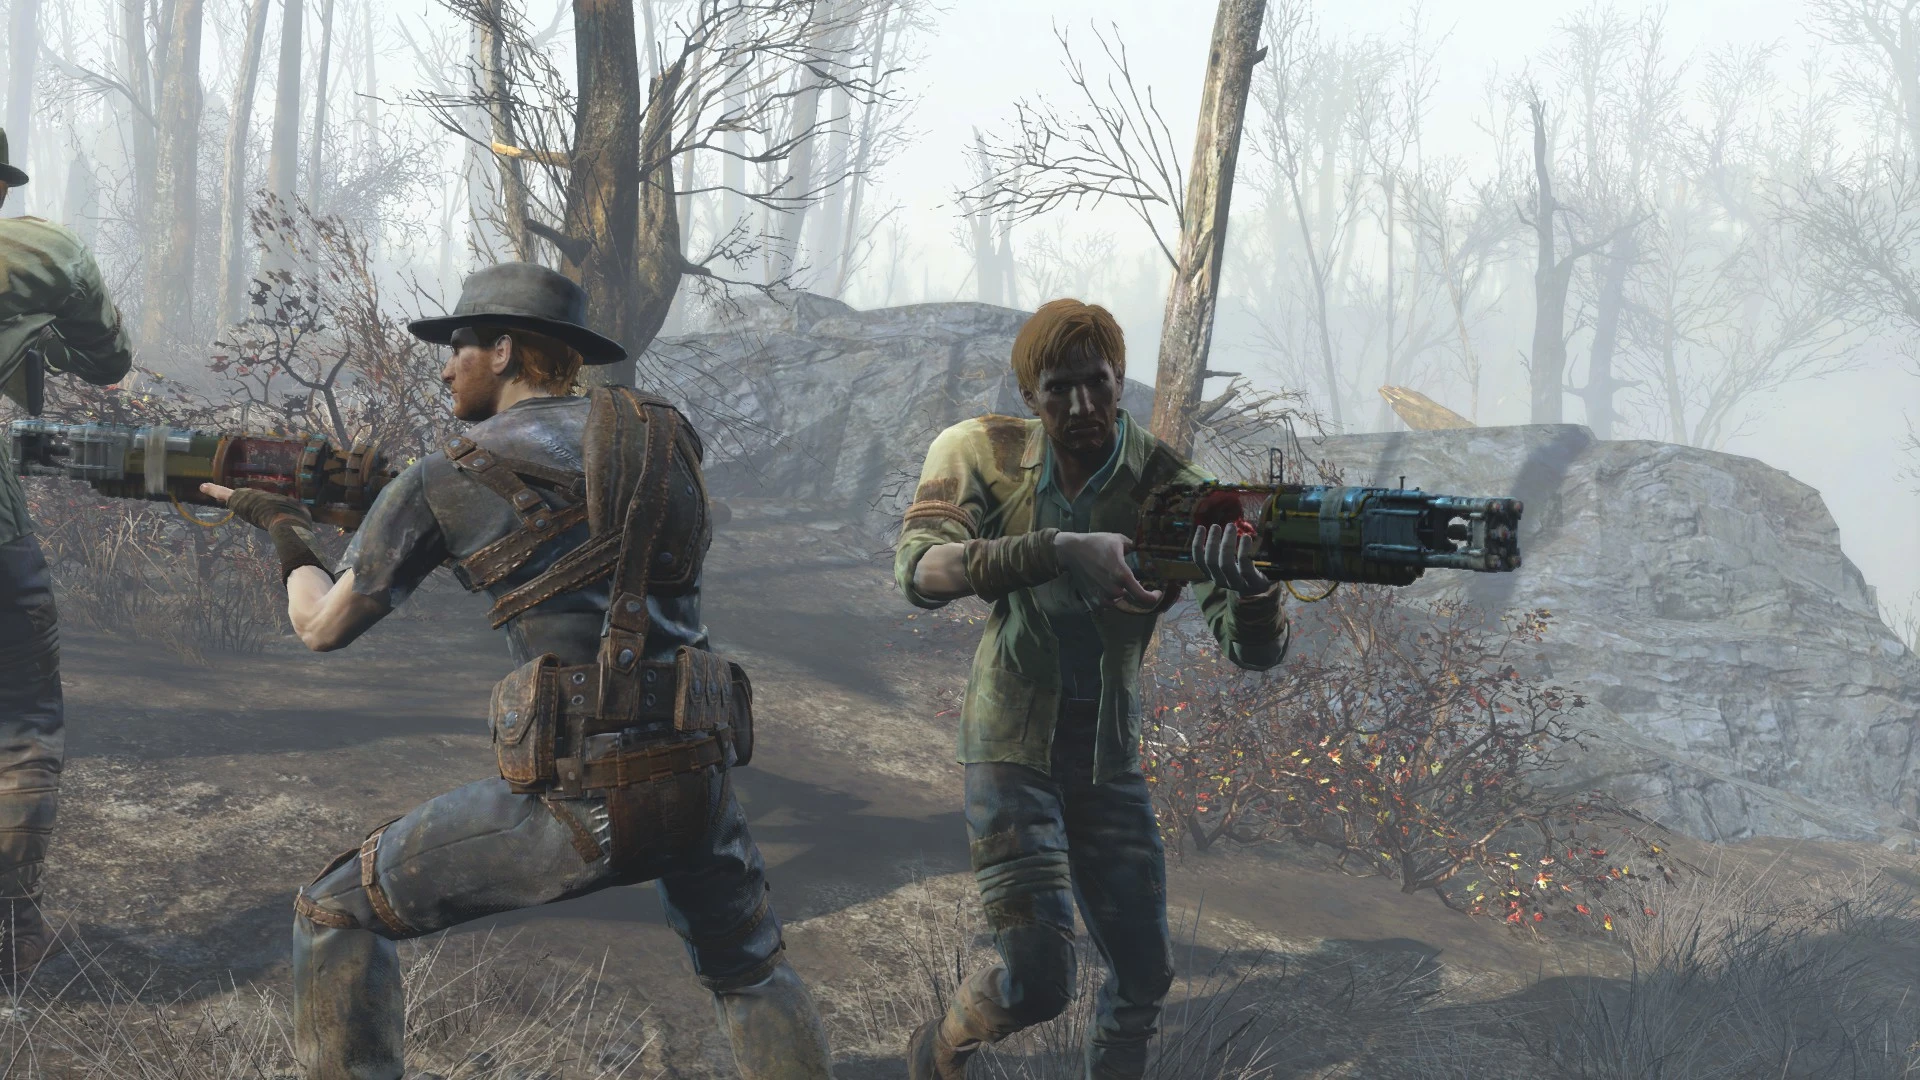 Gallery of Minutemen Uniform Fallout 4 Mod.